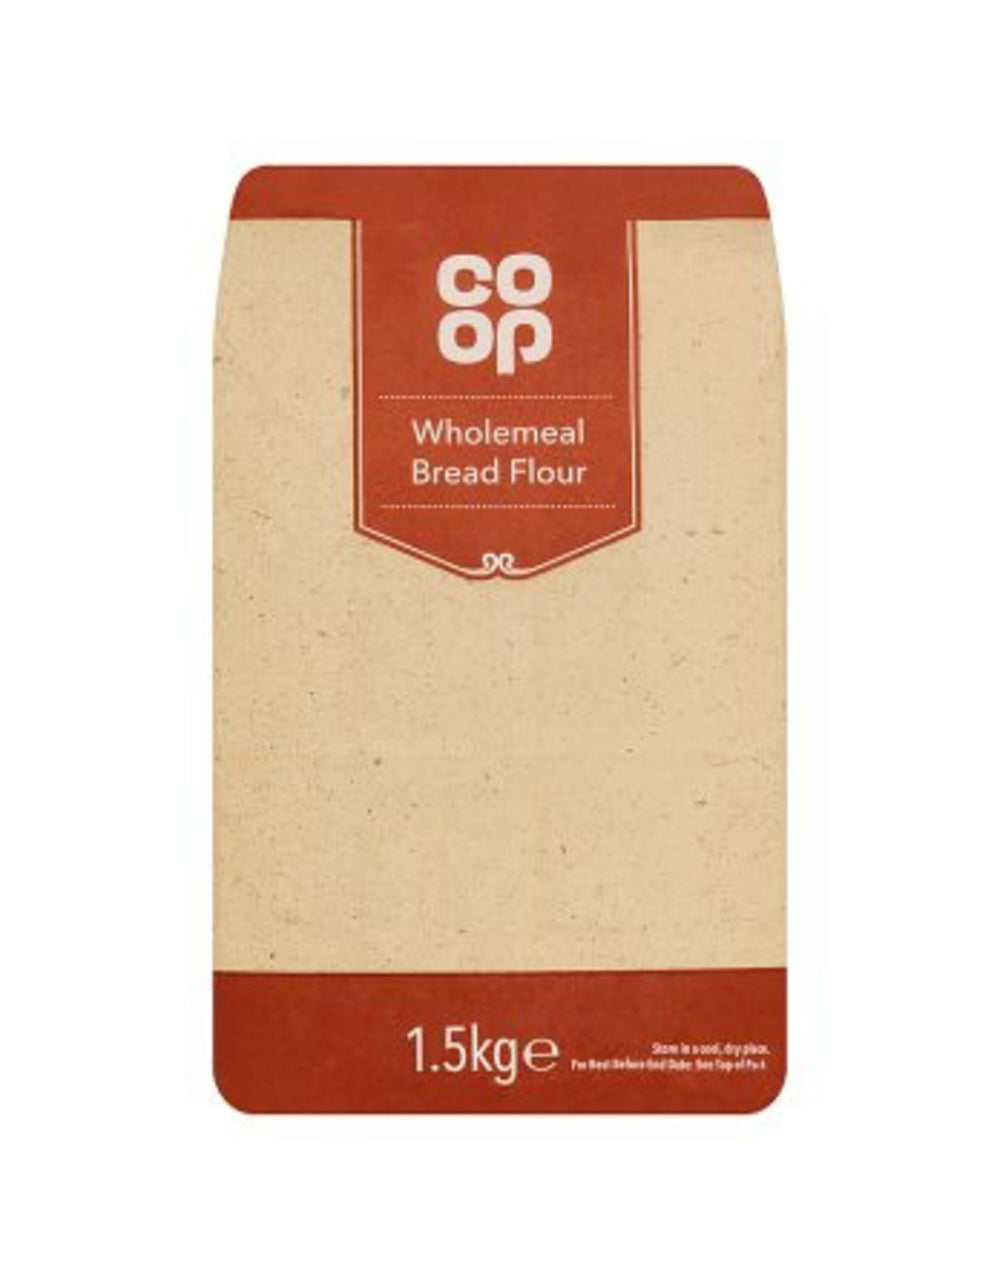 Co-op Wholemeal Bread Flour